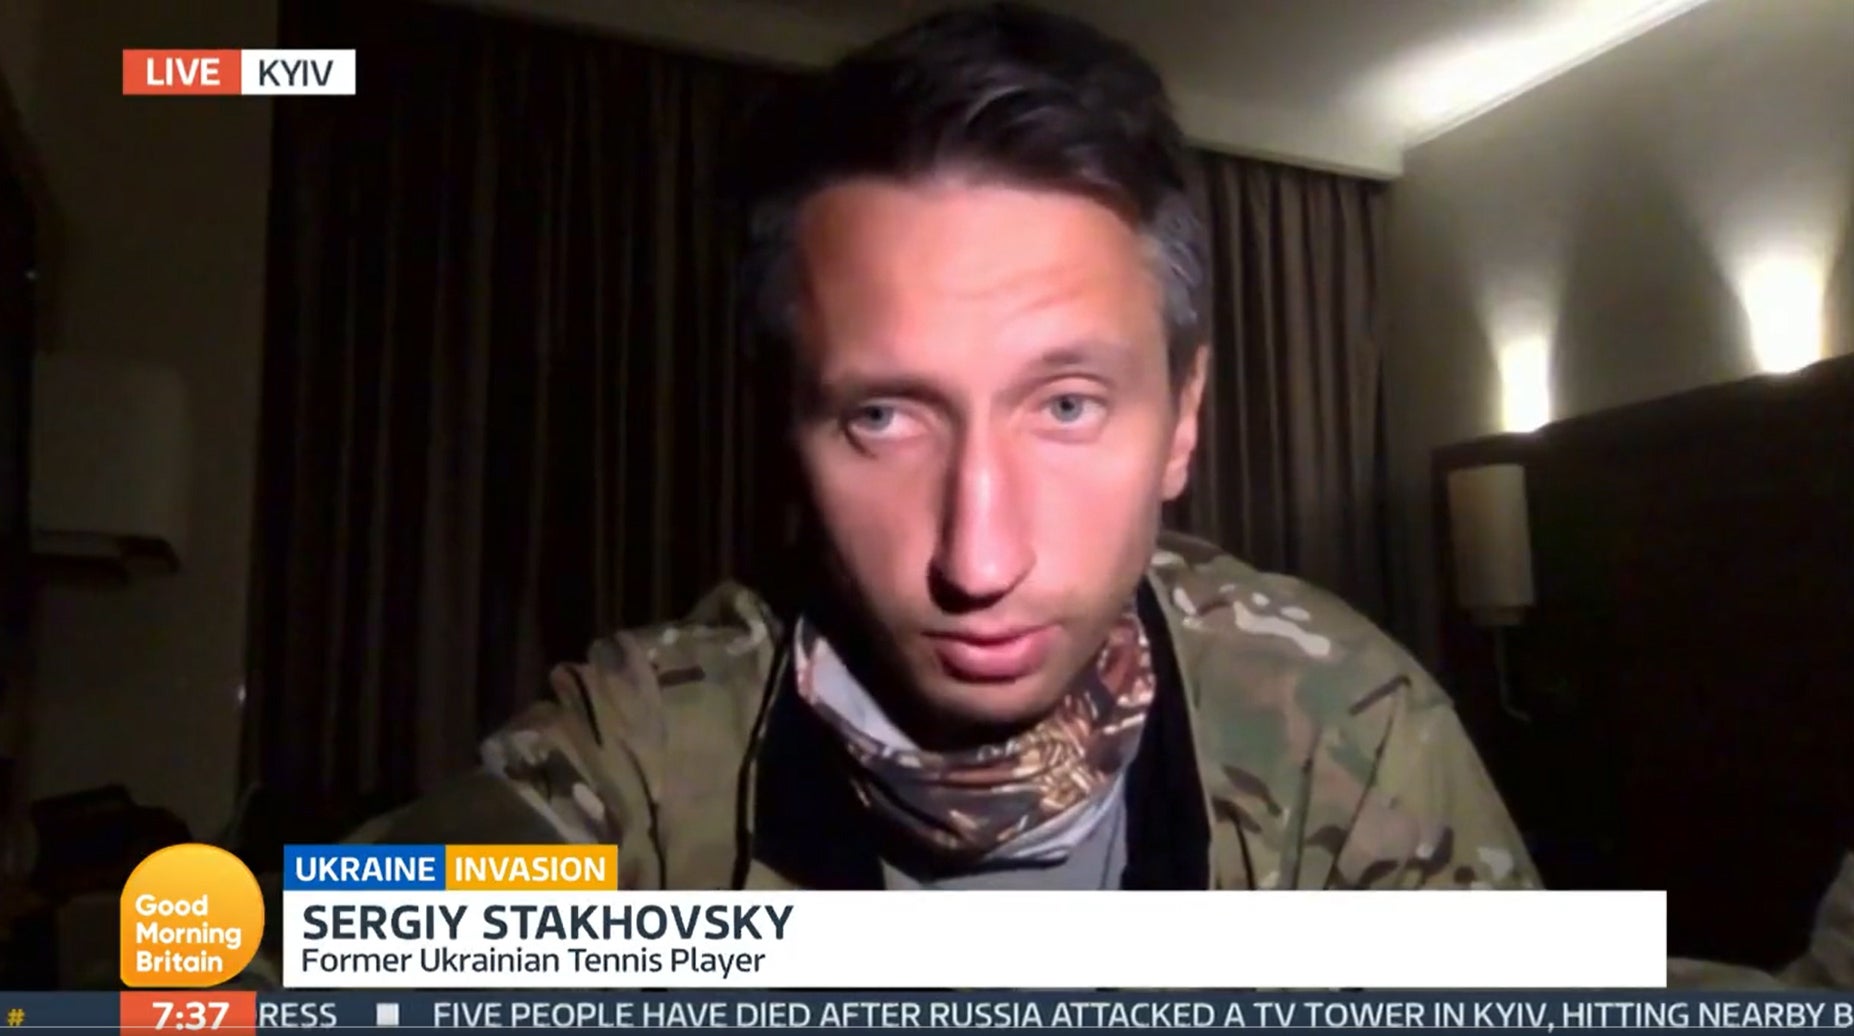 Sergiy Stakhovsky has taken up arms in Ukraine